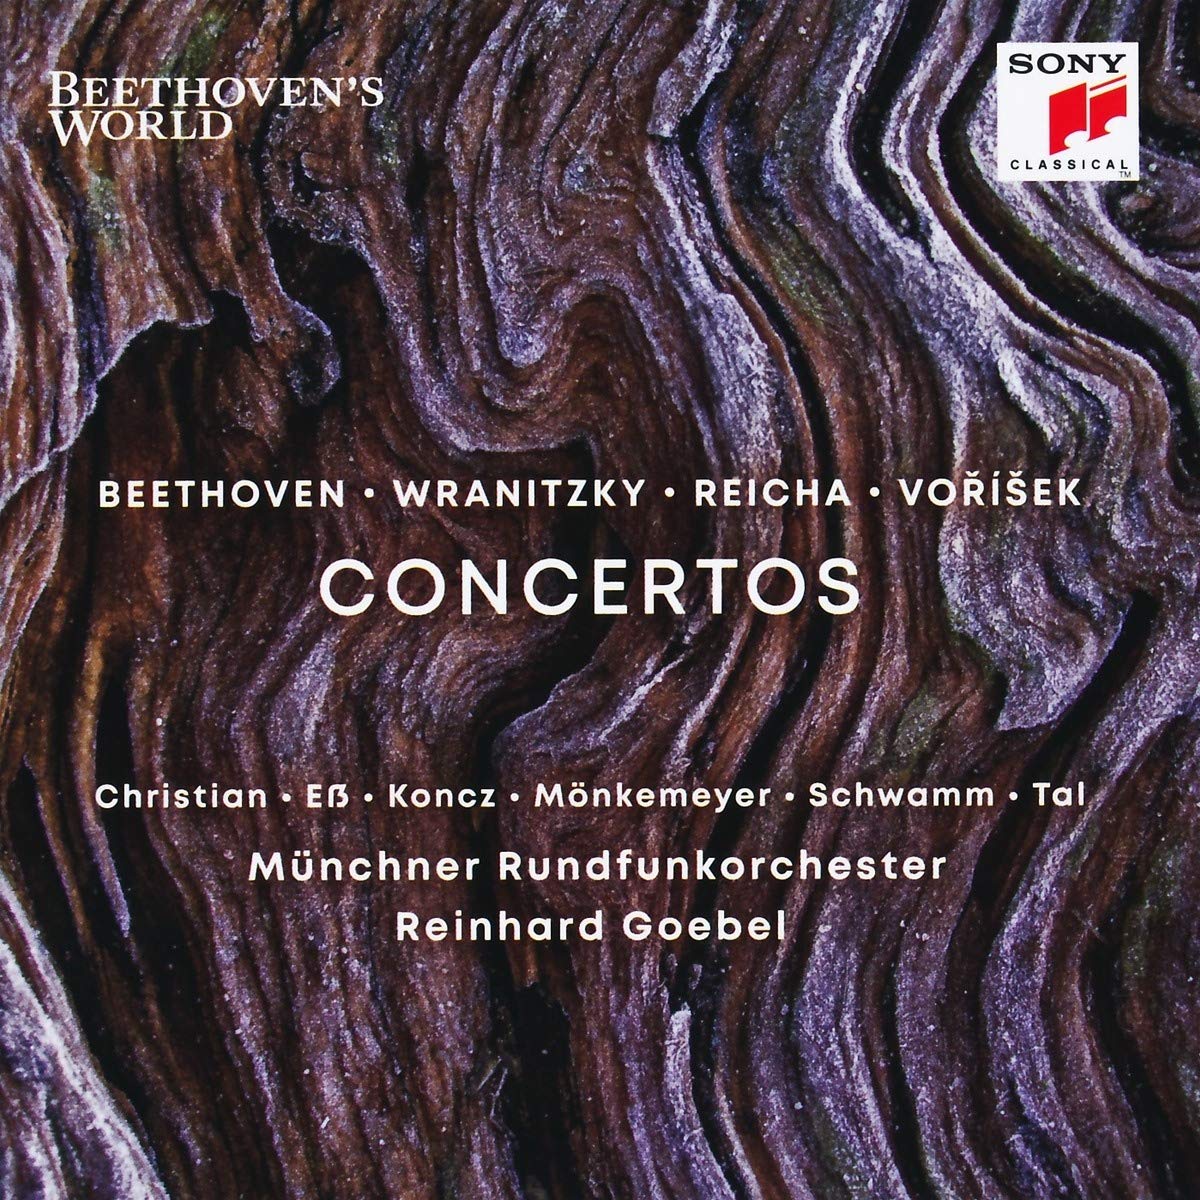 Beethoven's World: Concertos by Beethoven, Wranitzky, Reicha & Vorisek ...